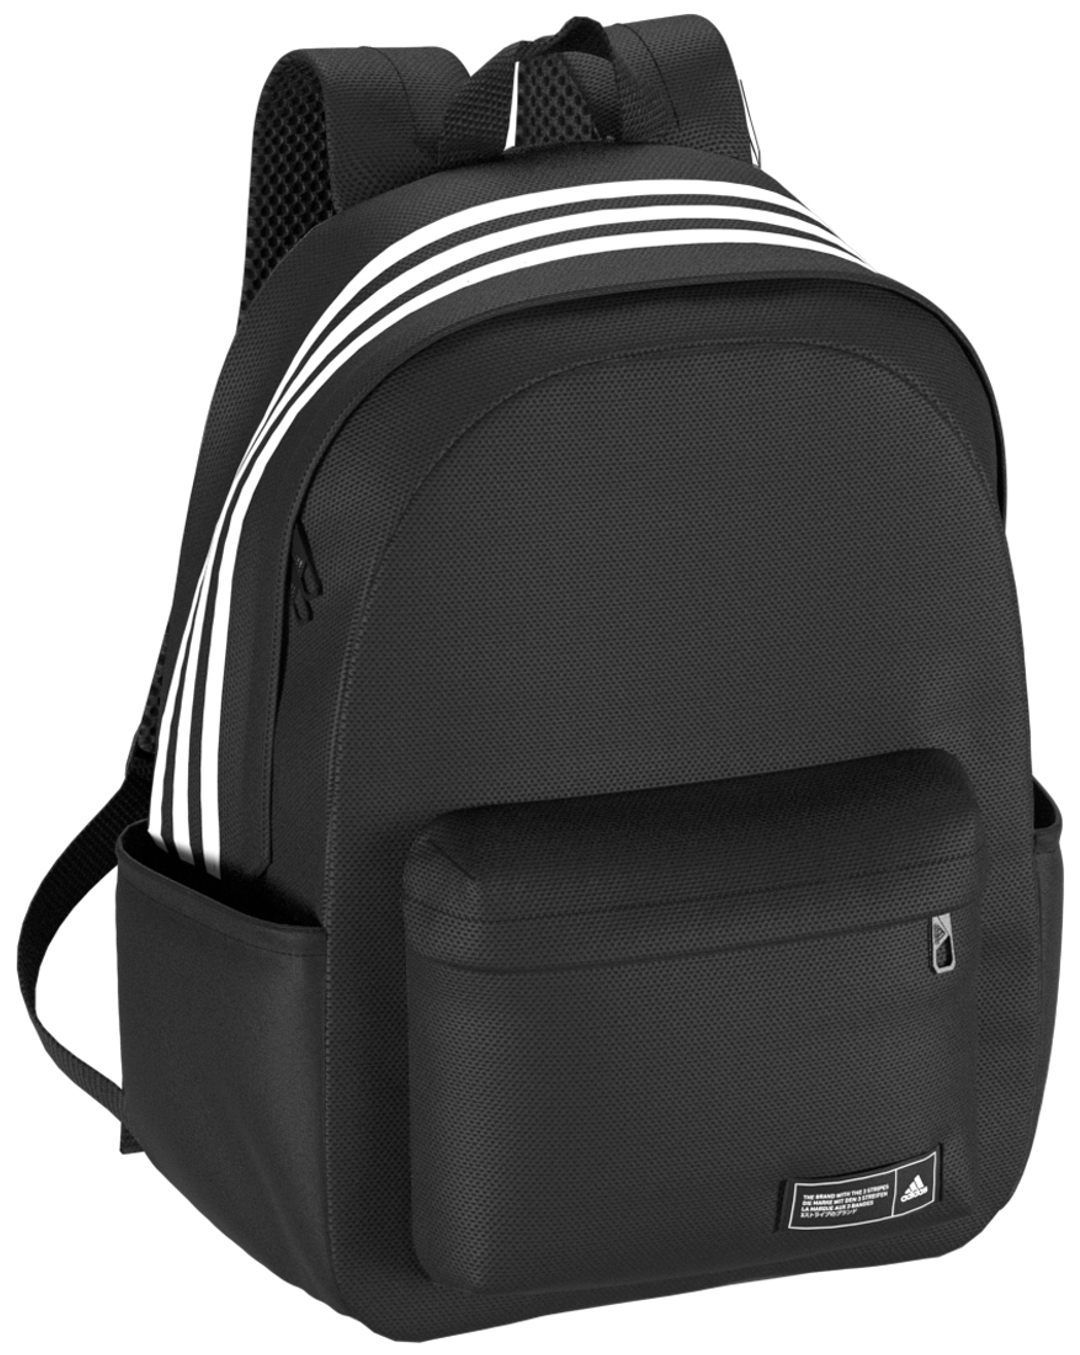 New Adidas Parkhood Backpack 23L daypack duffle gym school bag shoes shirt  pants | eBay